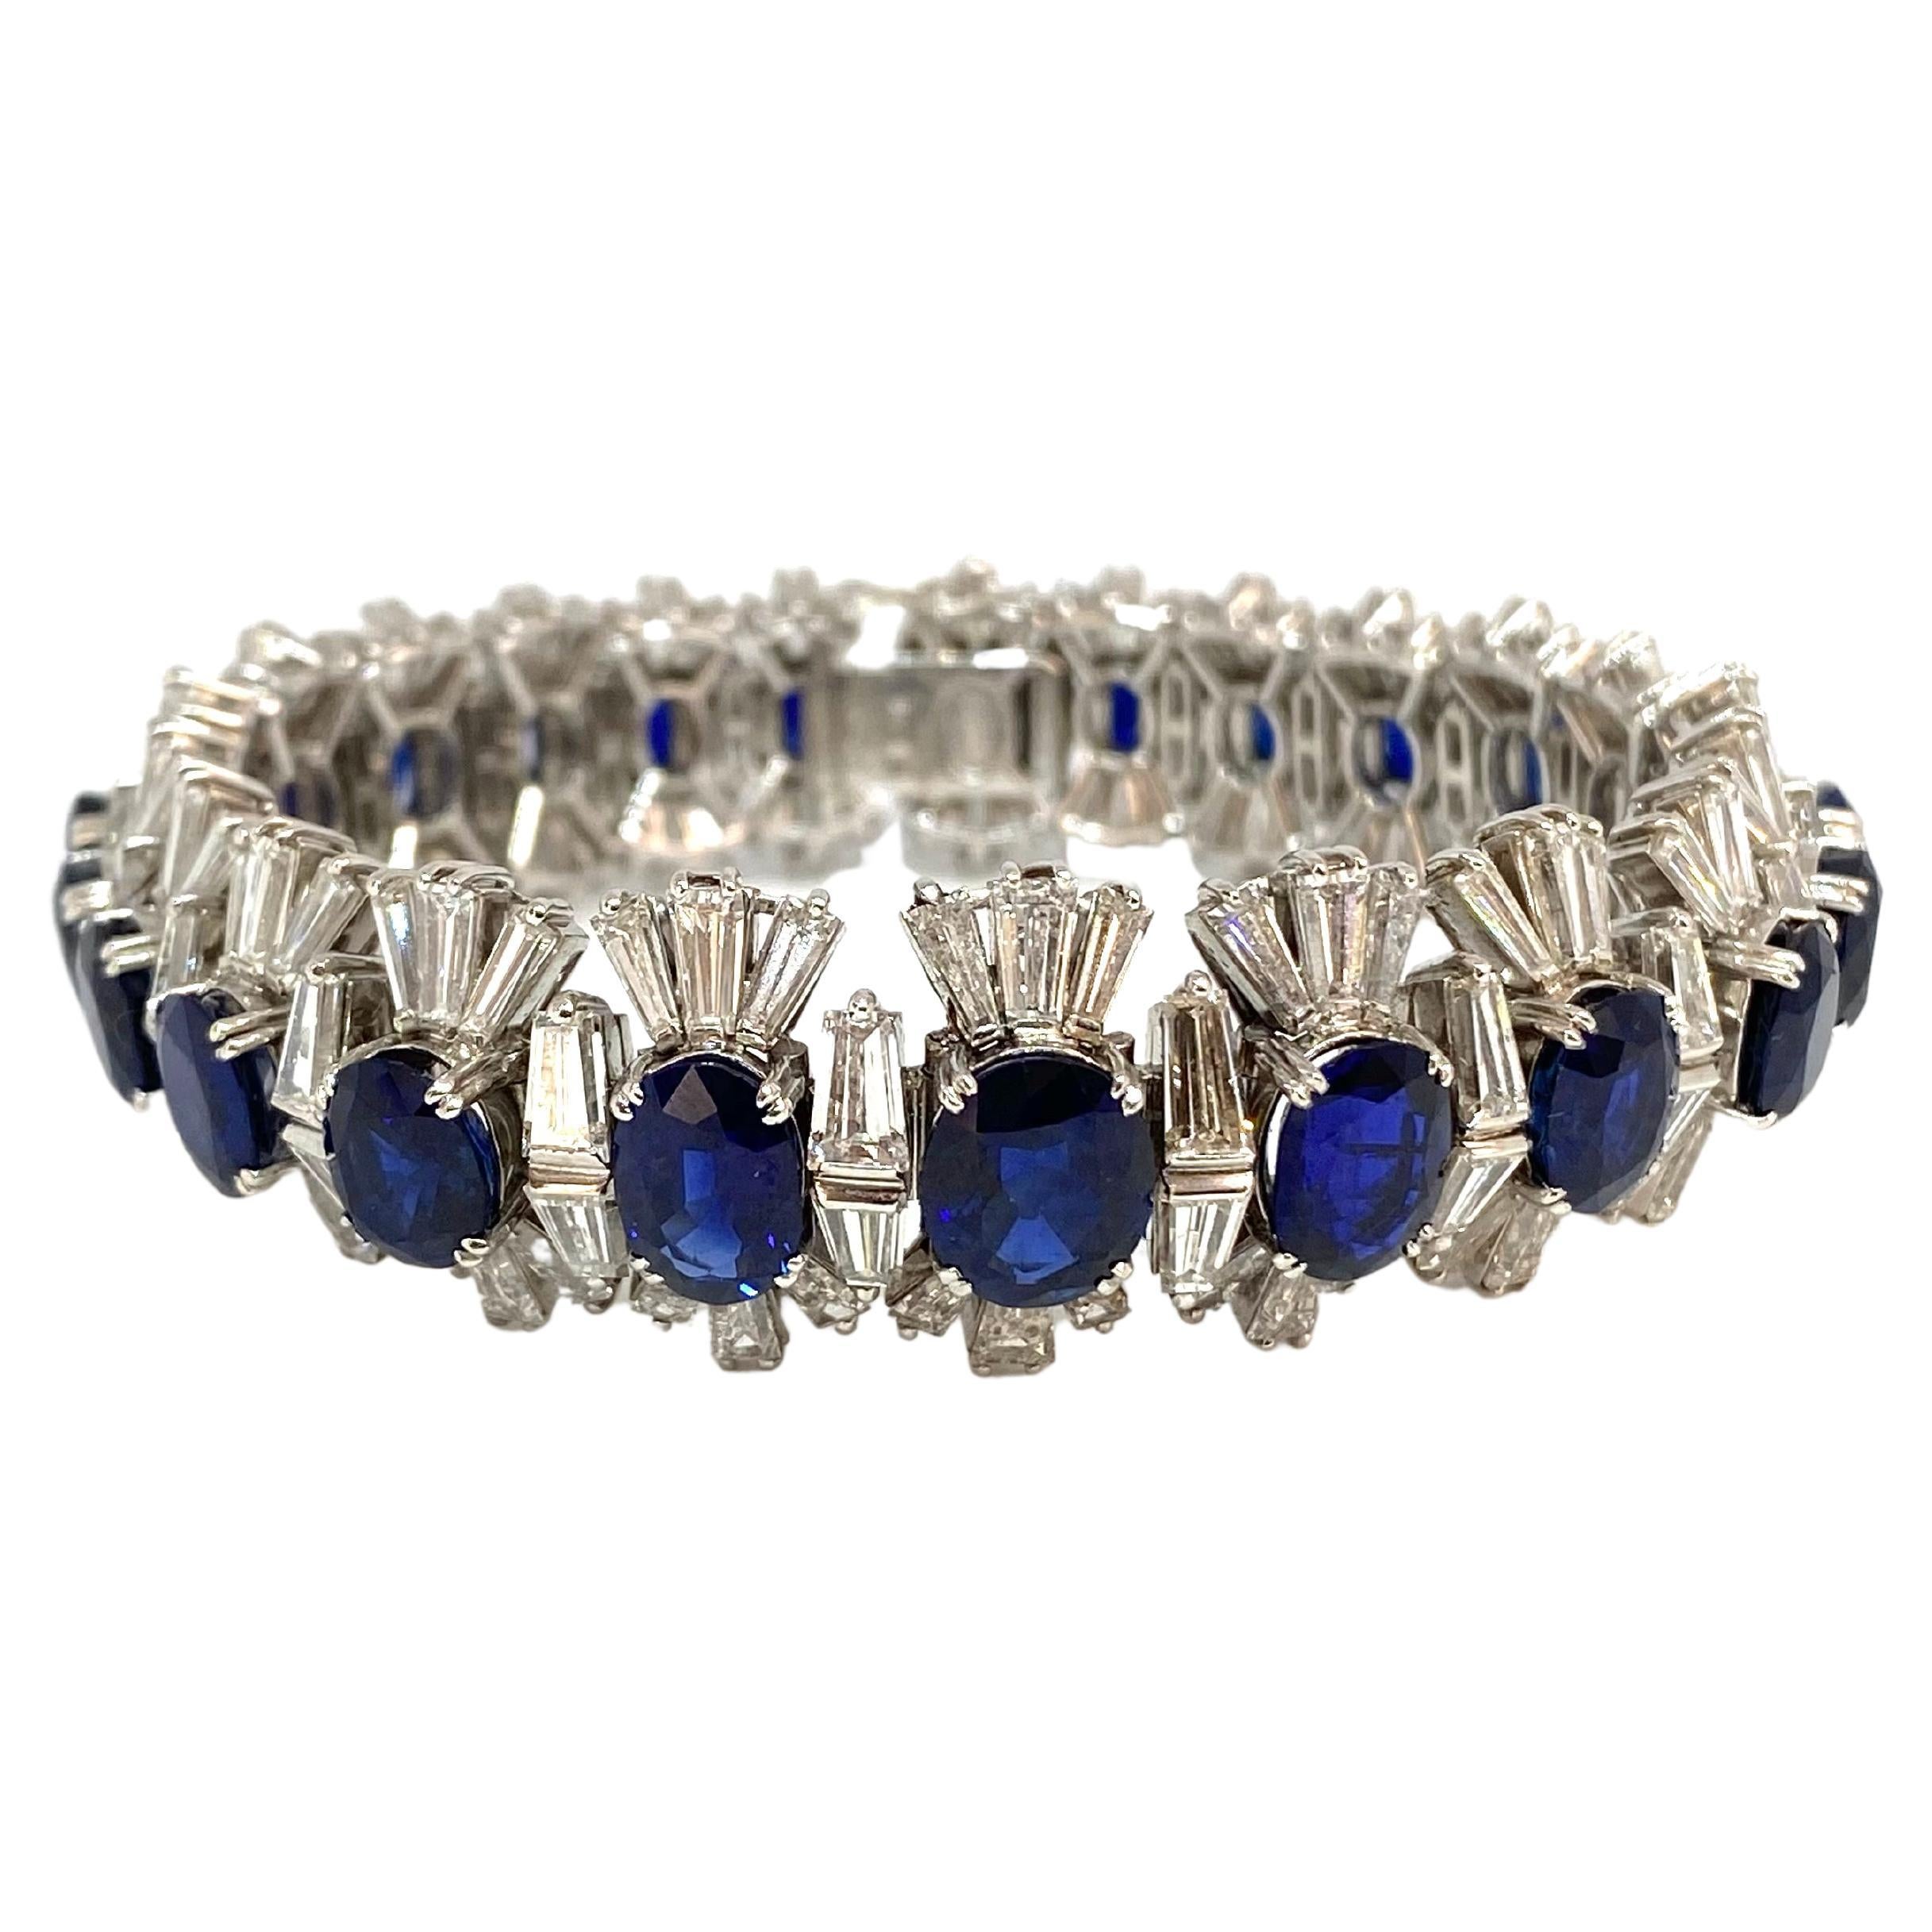 Art Deco Style Bracelet Vintage Silver Tone Jewellery Gift for Her Blue Link Bracelet Flower Pattern Bracelet